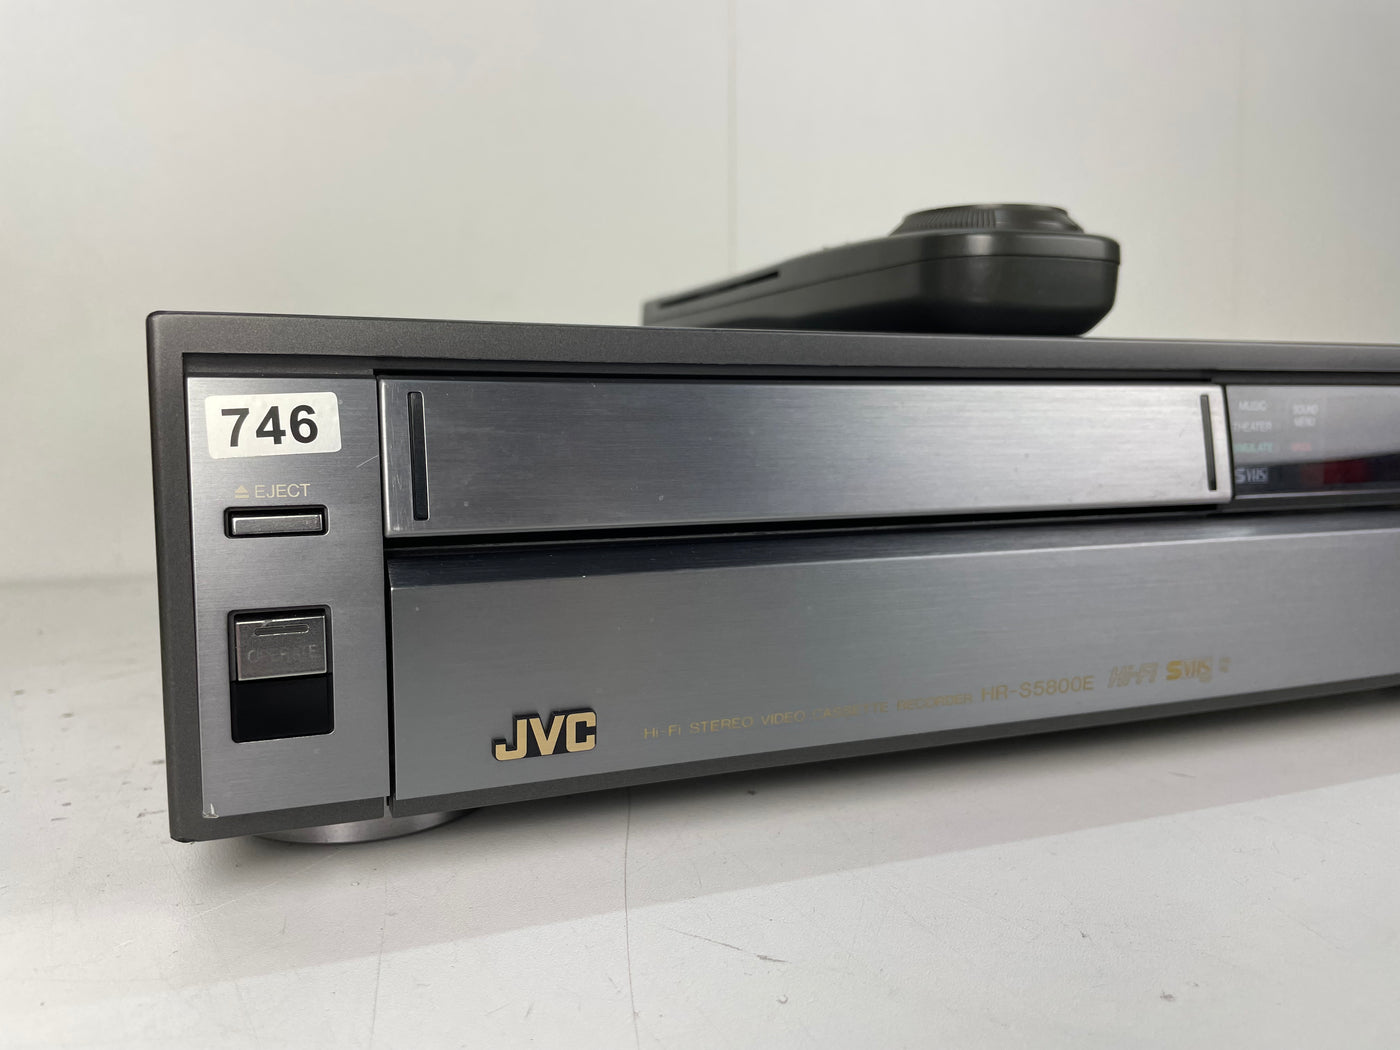 JVC HR-S5800E Super VHS Video cassette recorder | With remote